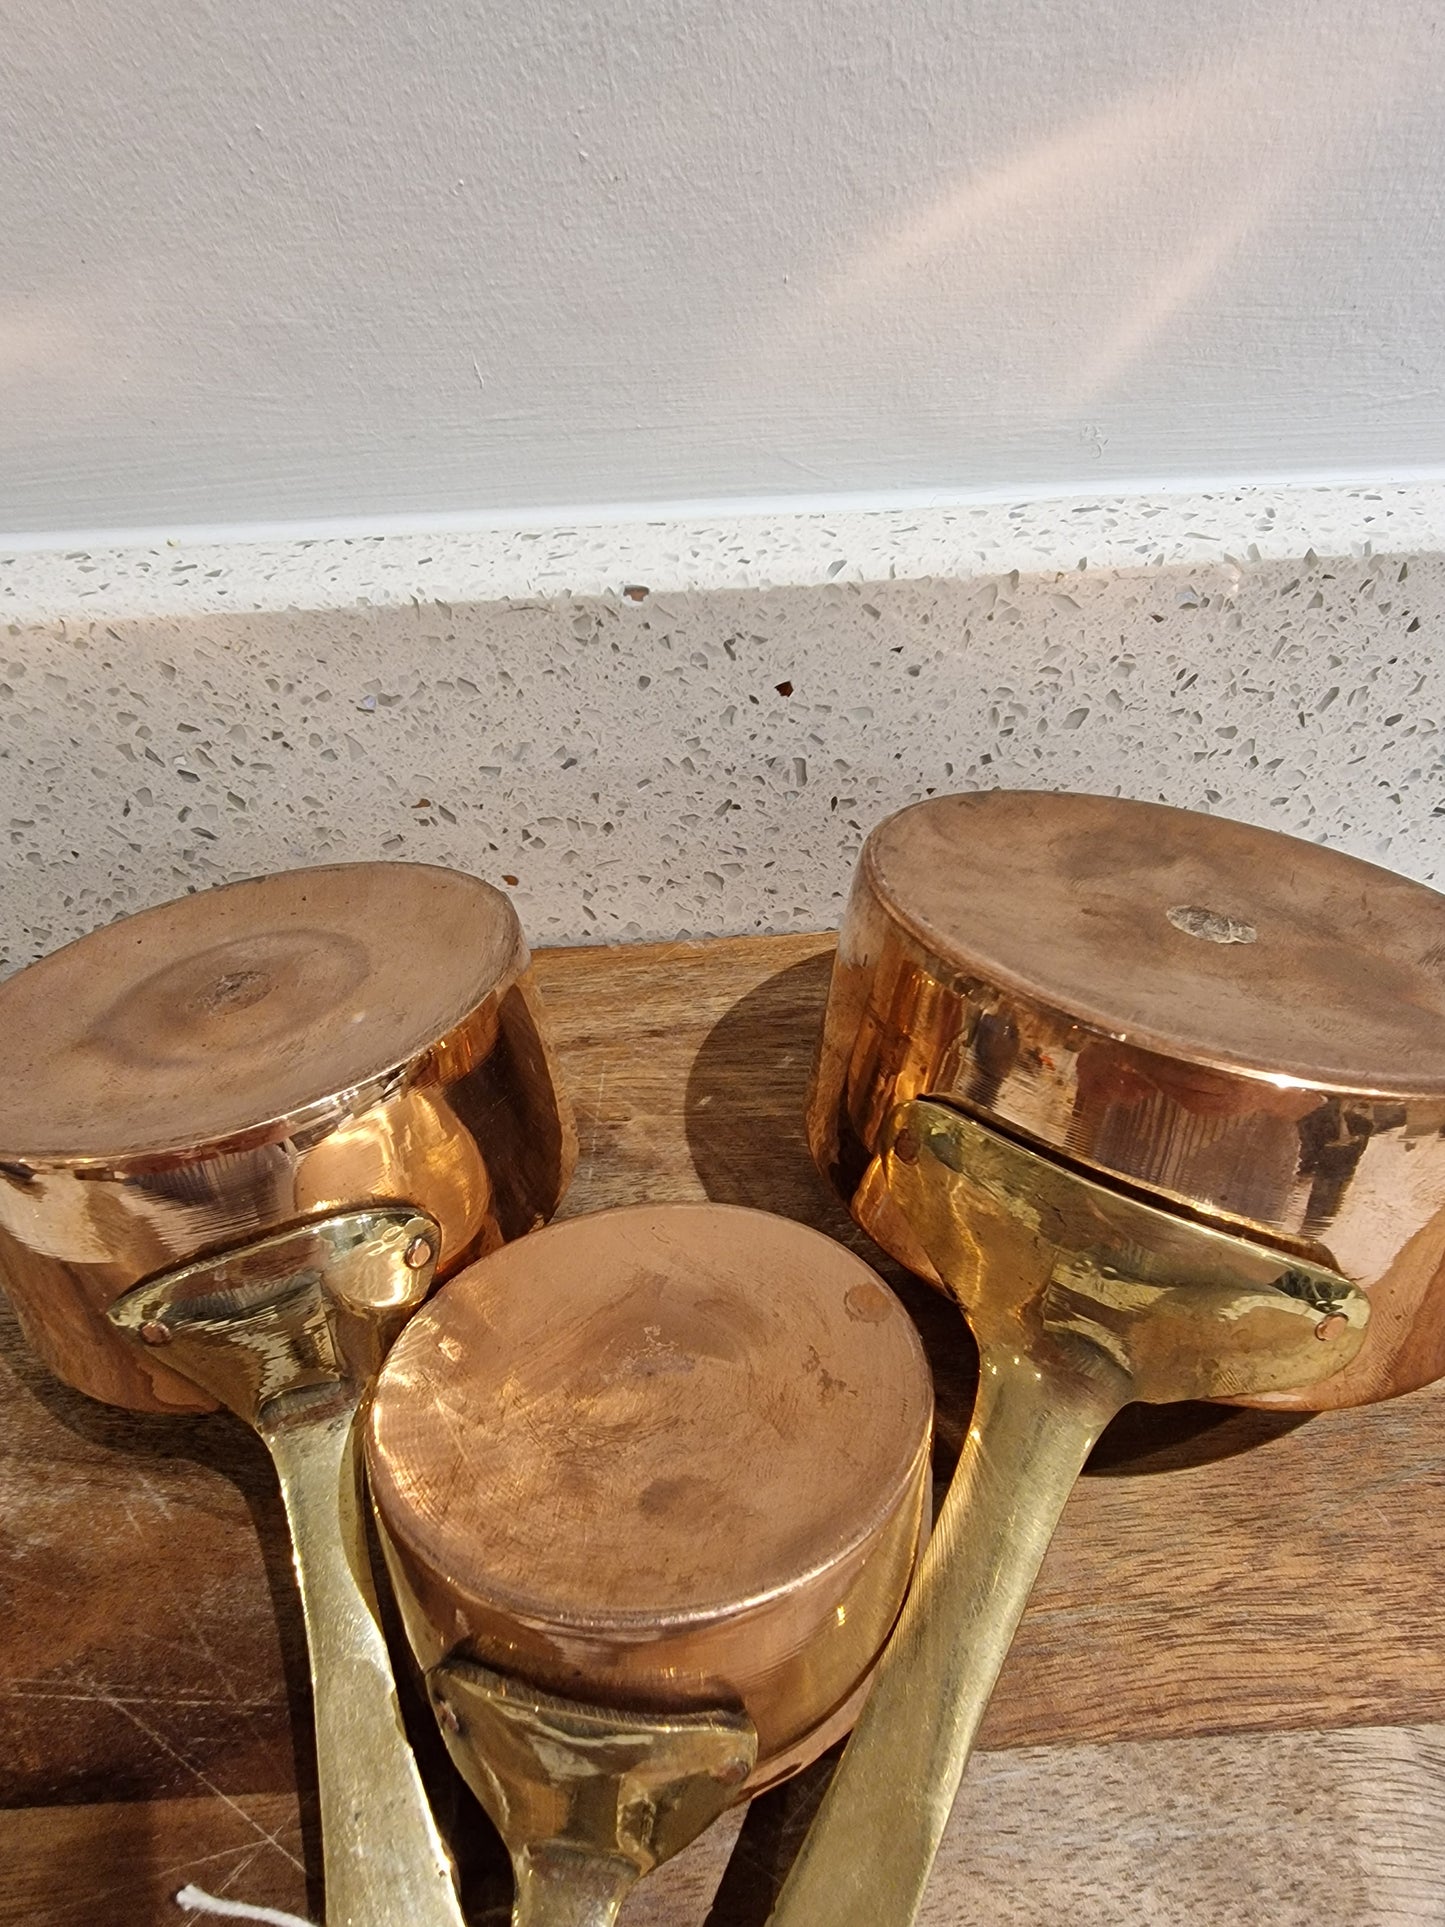 Set of Three Copper Pans